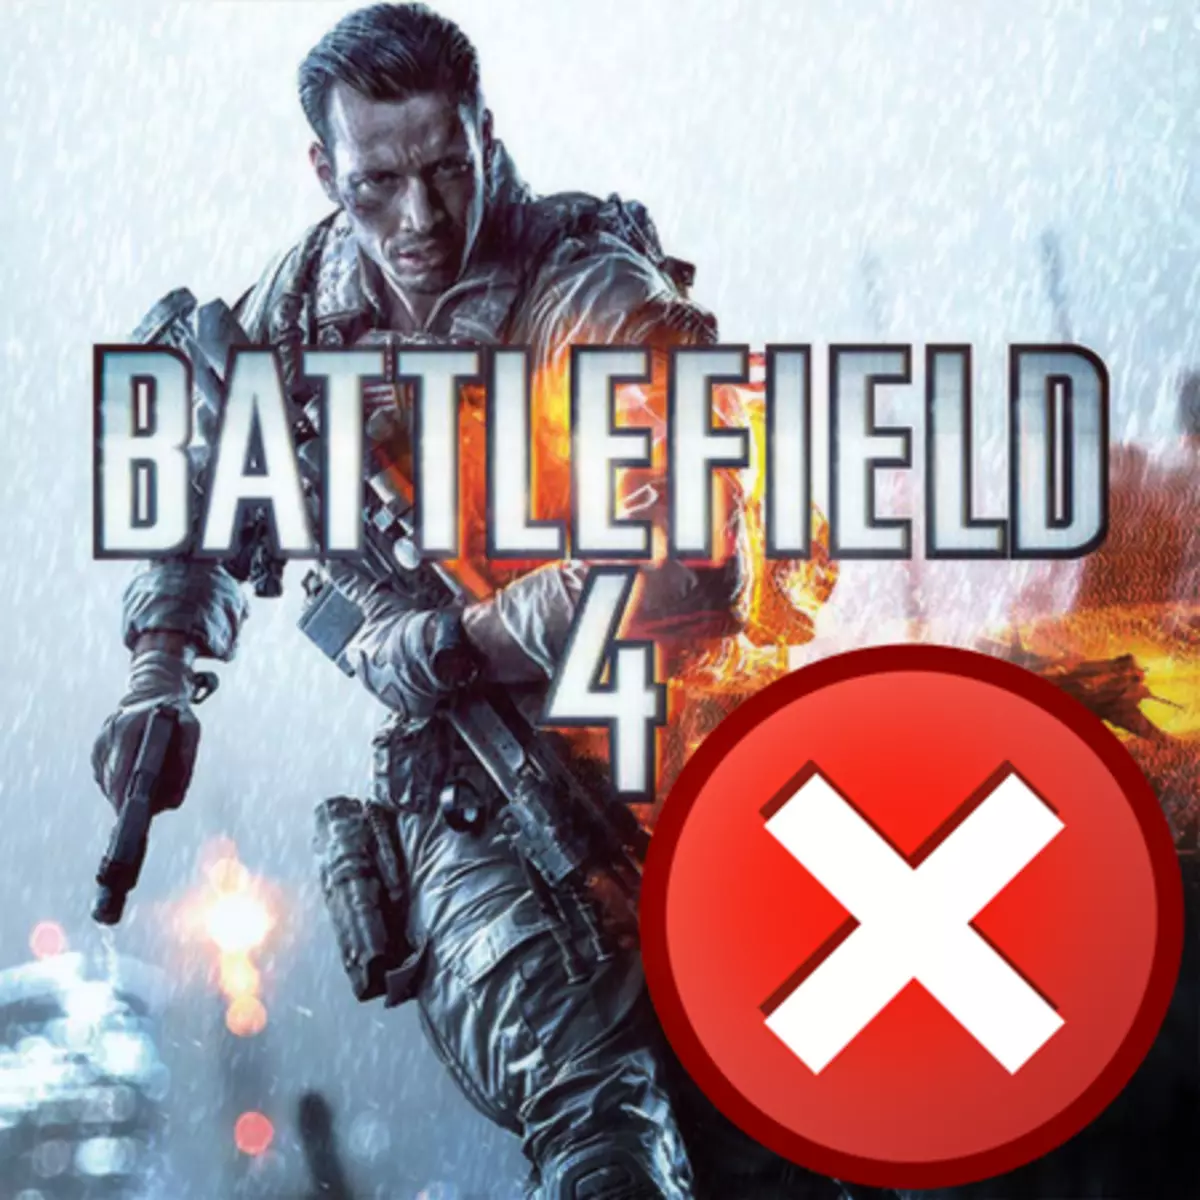 DirectX Function GetDeviceremovedreson Battlefield 4'teki hata